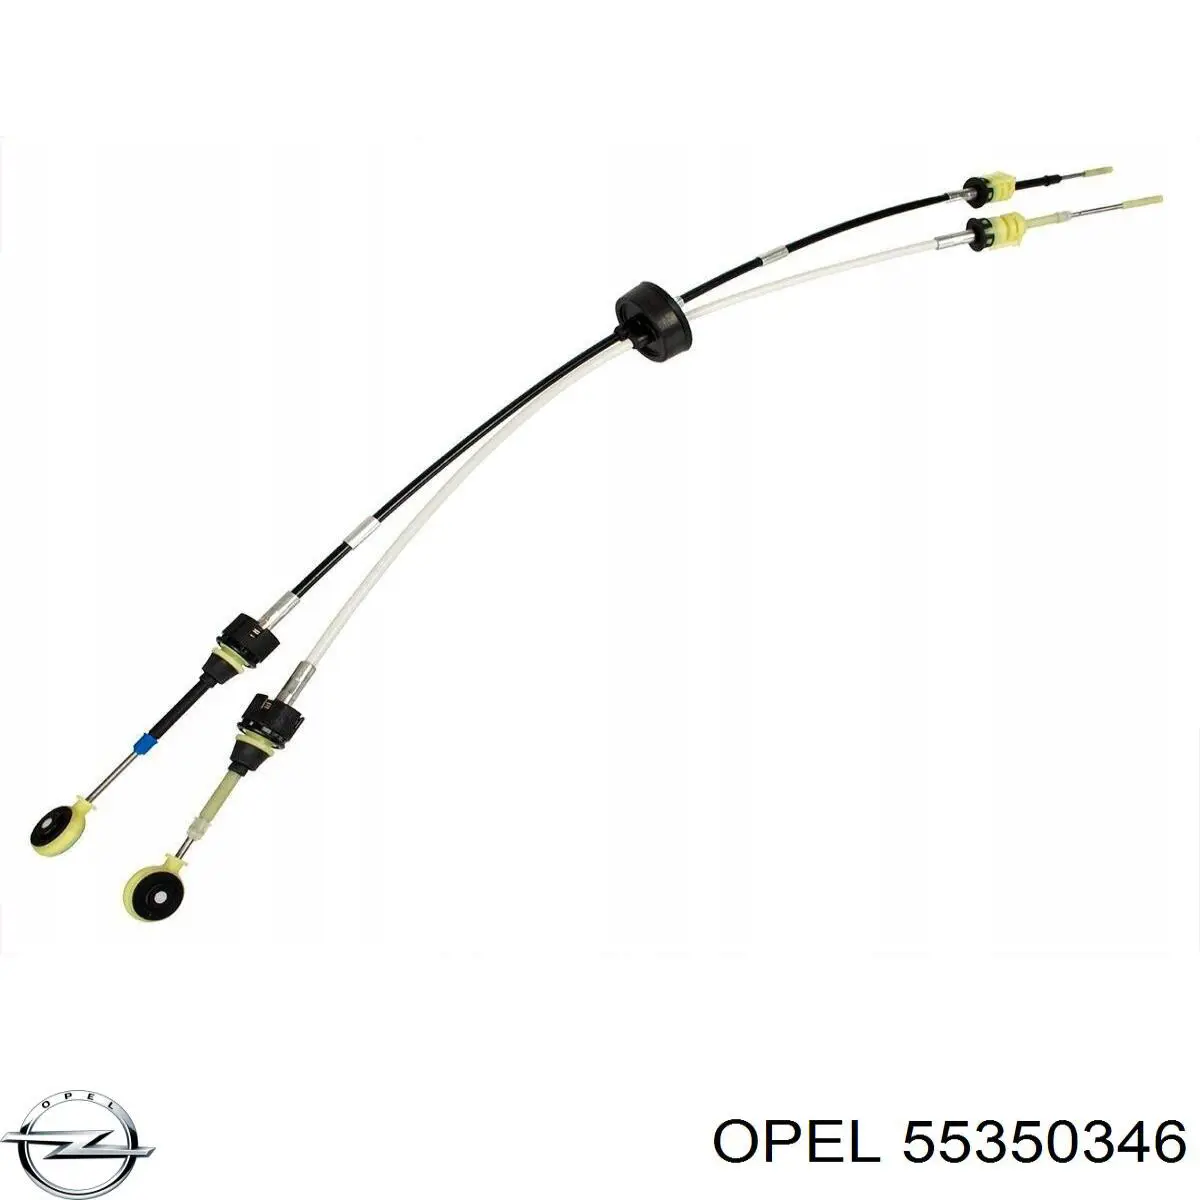 55350346 Opel cabo de mudança duplo